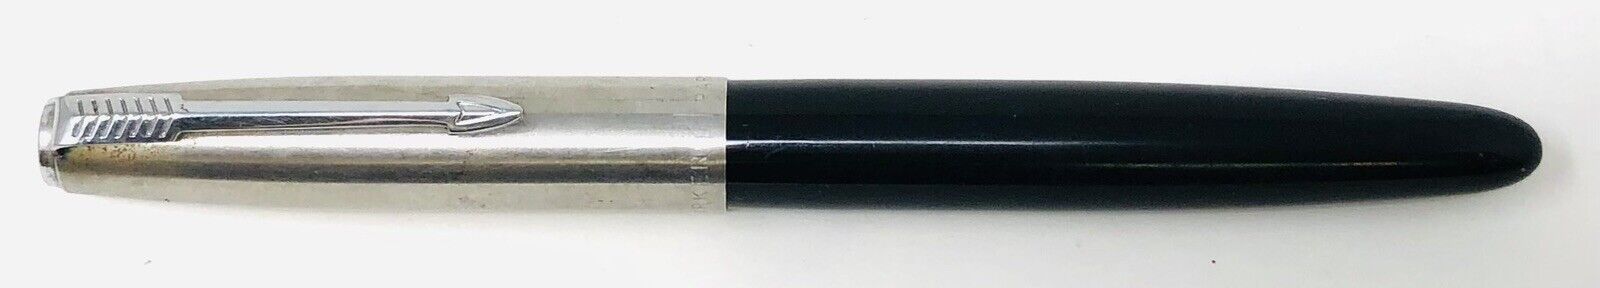 Parker 21 Special Full Size Black Stainless Steel Fine Nib Fountain Pen FG23